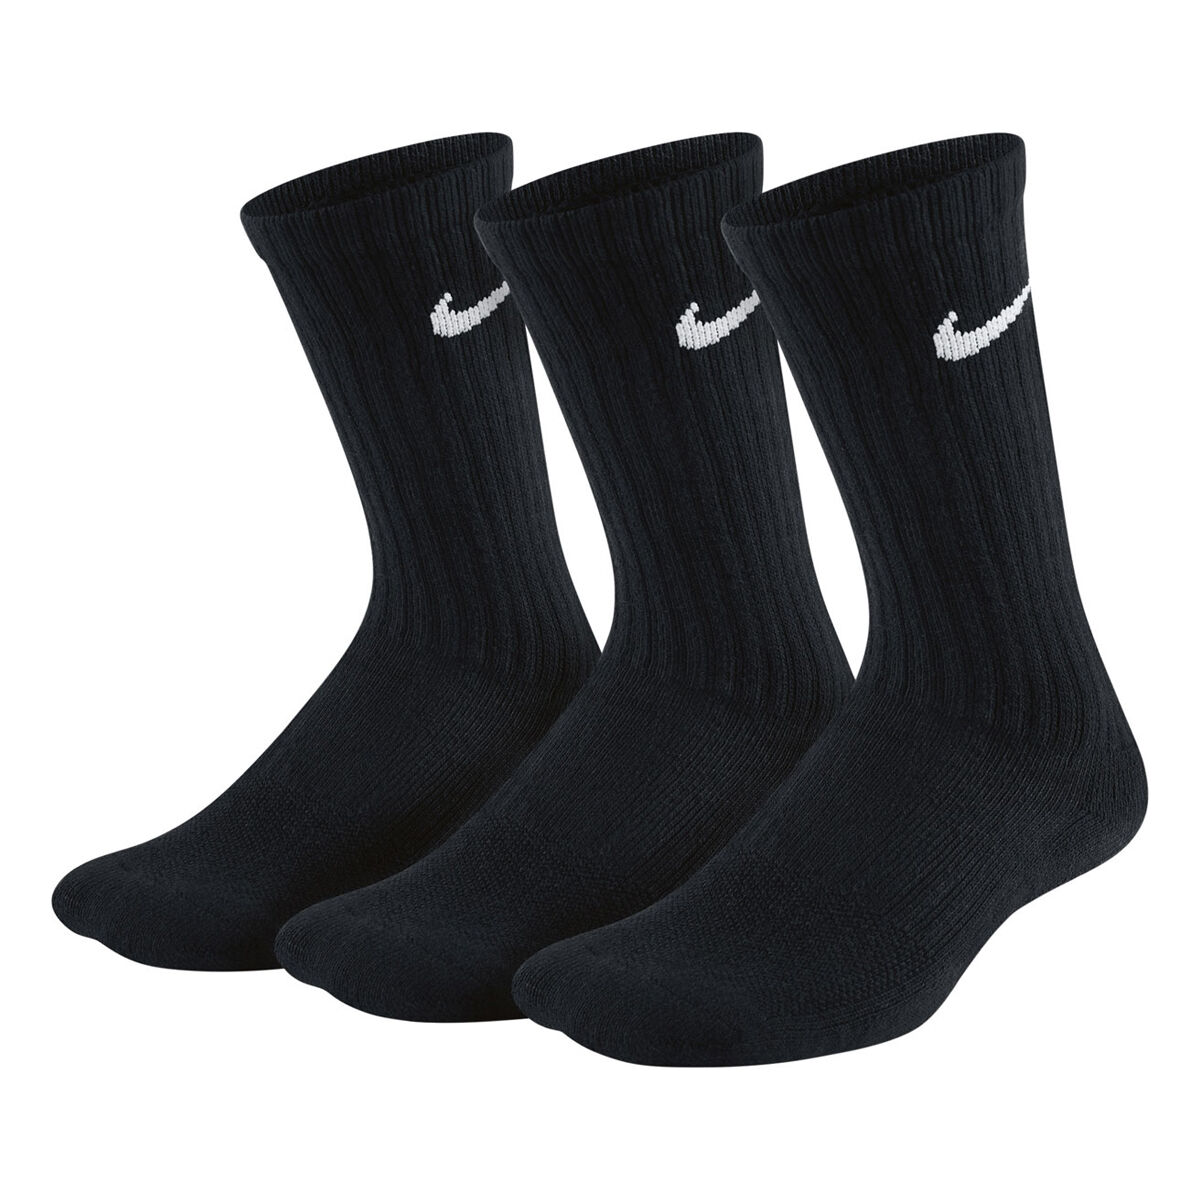 nike socks with designs